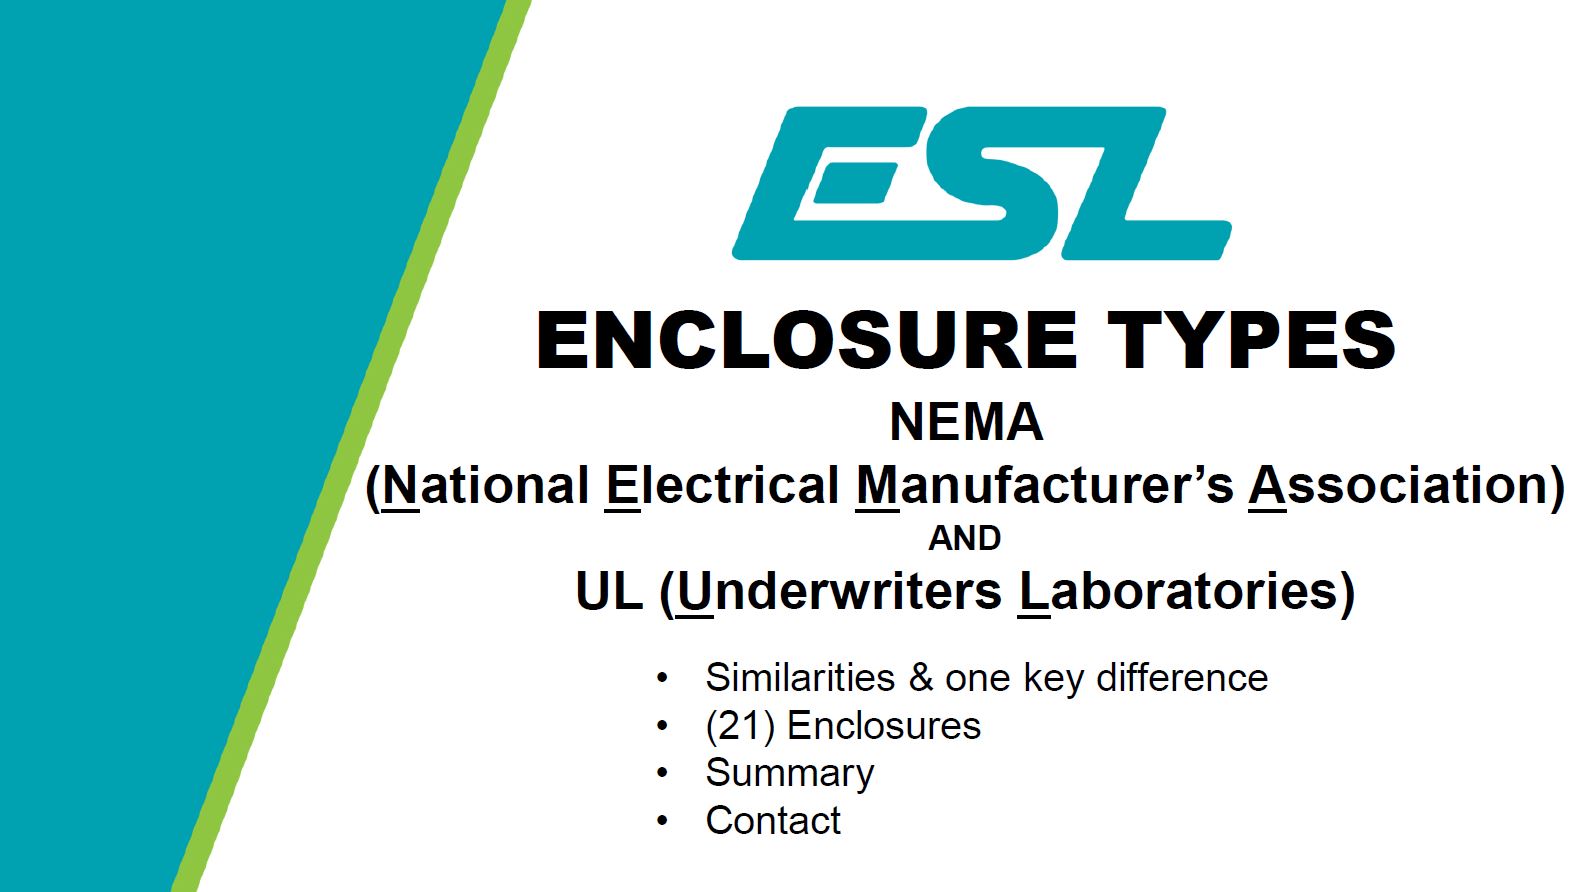 Download ESL’s Enclosure Type Presentation